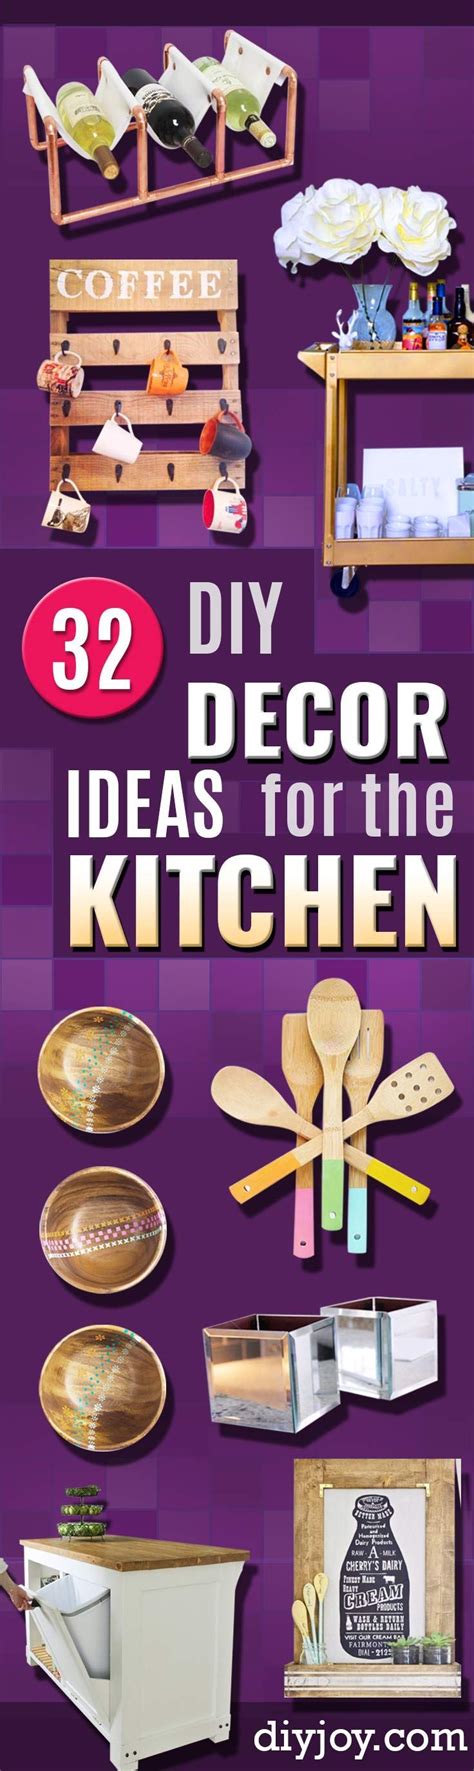 37 Creative DIY Kitchen Decor Ideas | Diy kitchen decor, Rustic diy projects, Diy home decor ...